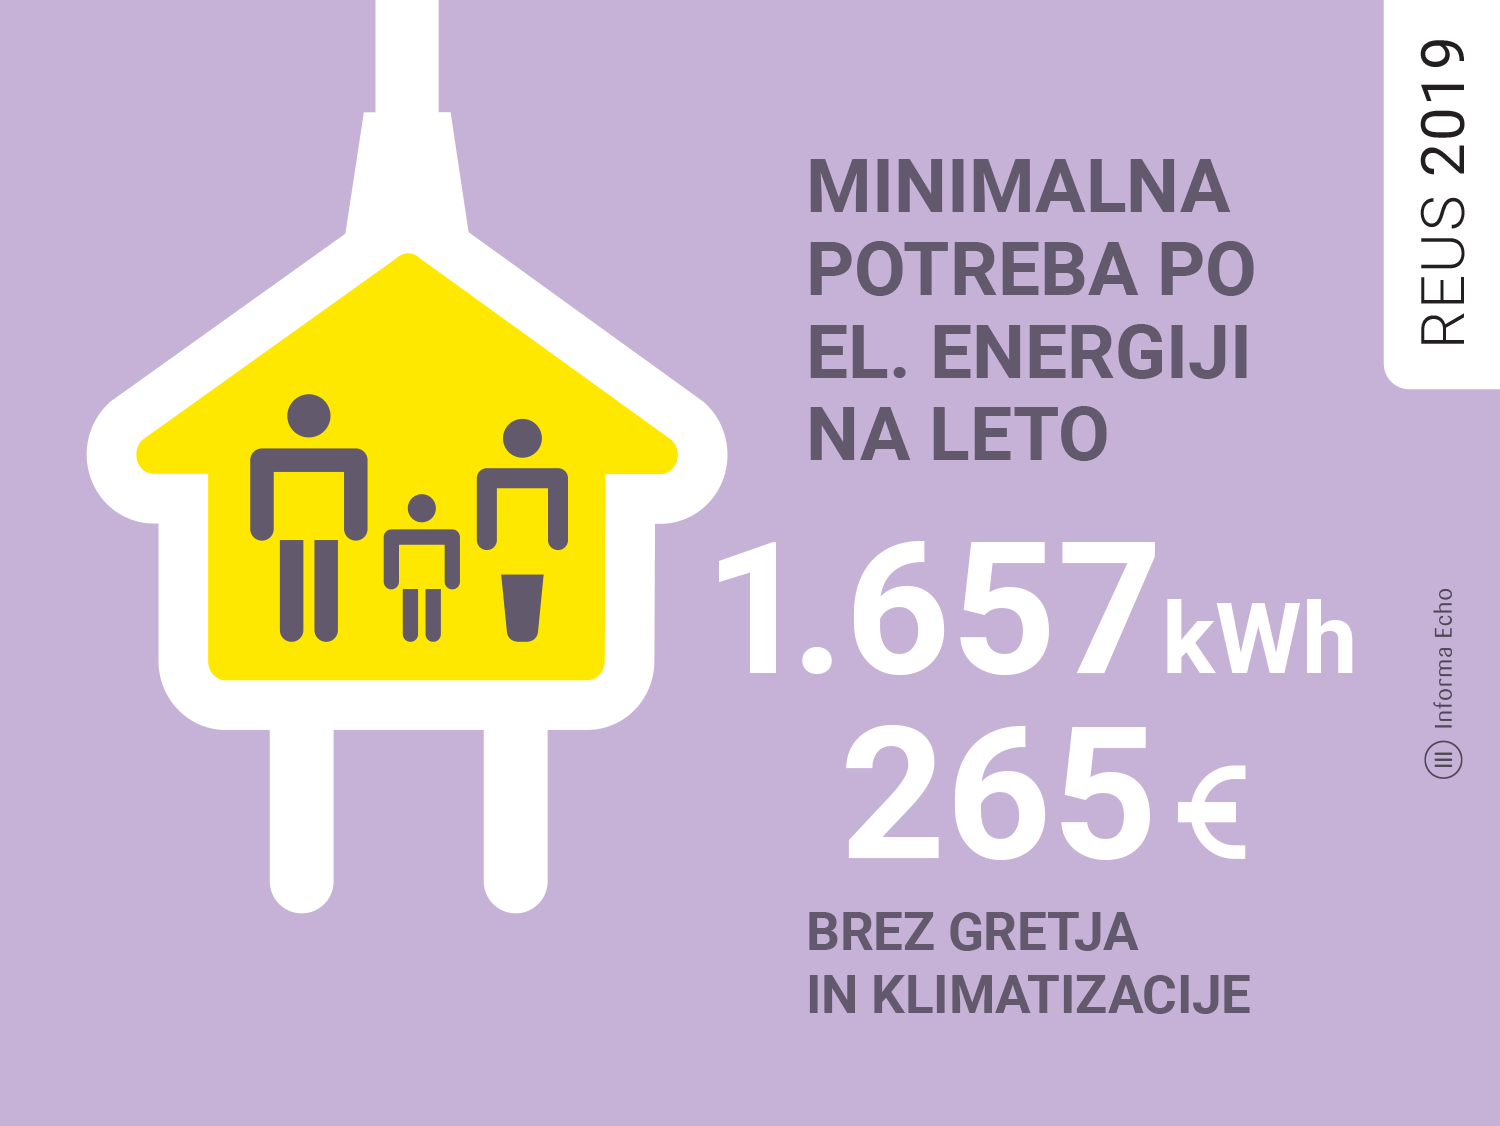 Minimalna potreba po energiji za eno gospodinjstvo / Raziskava REUS 2019